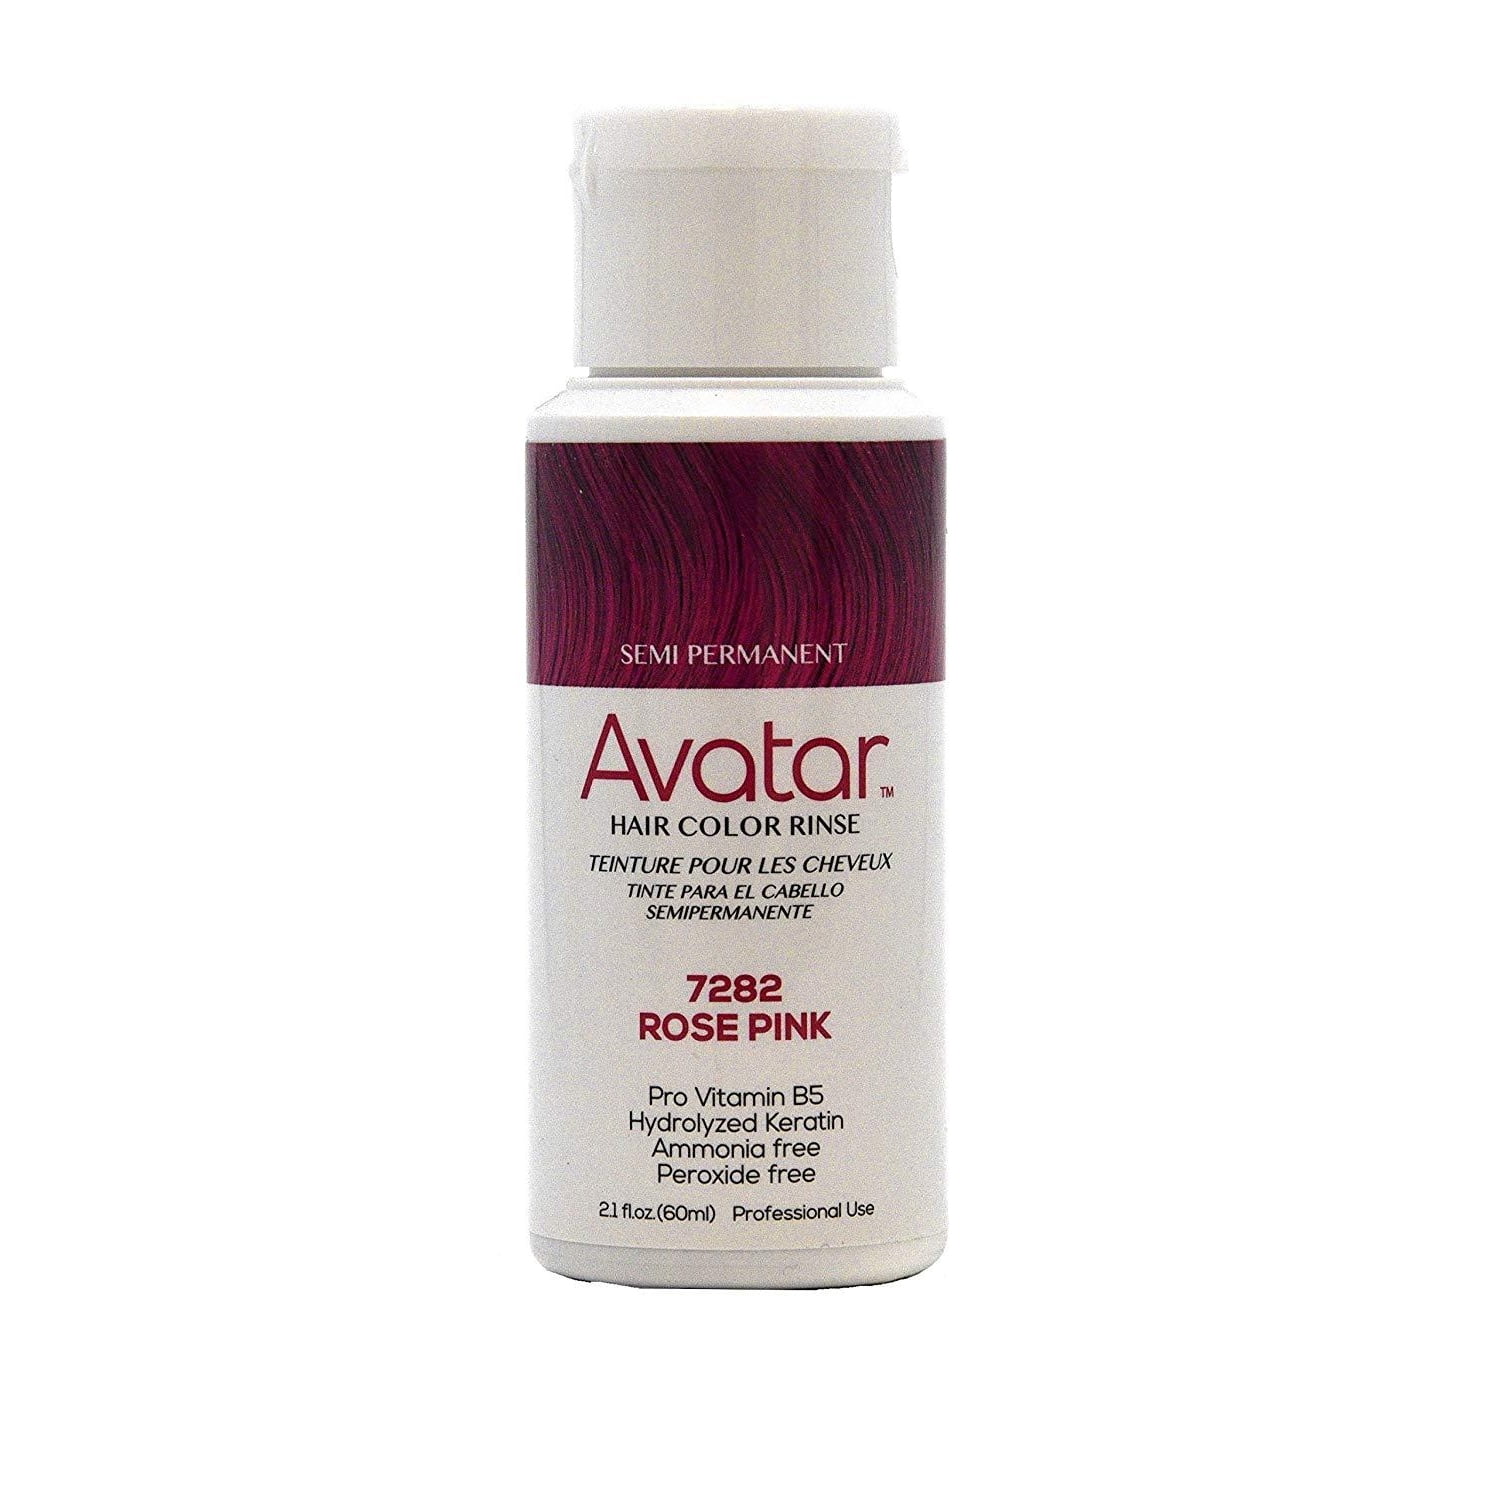 Avatar Semi Permanent Hair Color Rinse, Rose Pink, 2.1 Oz. - Walmart.com